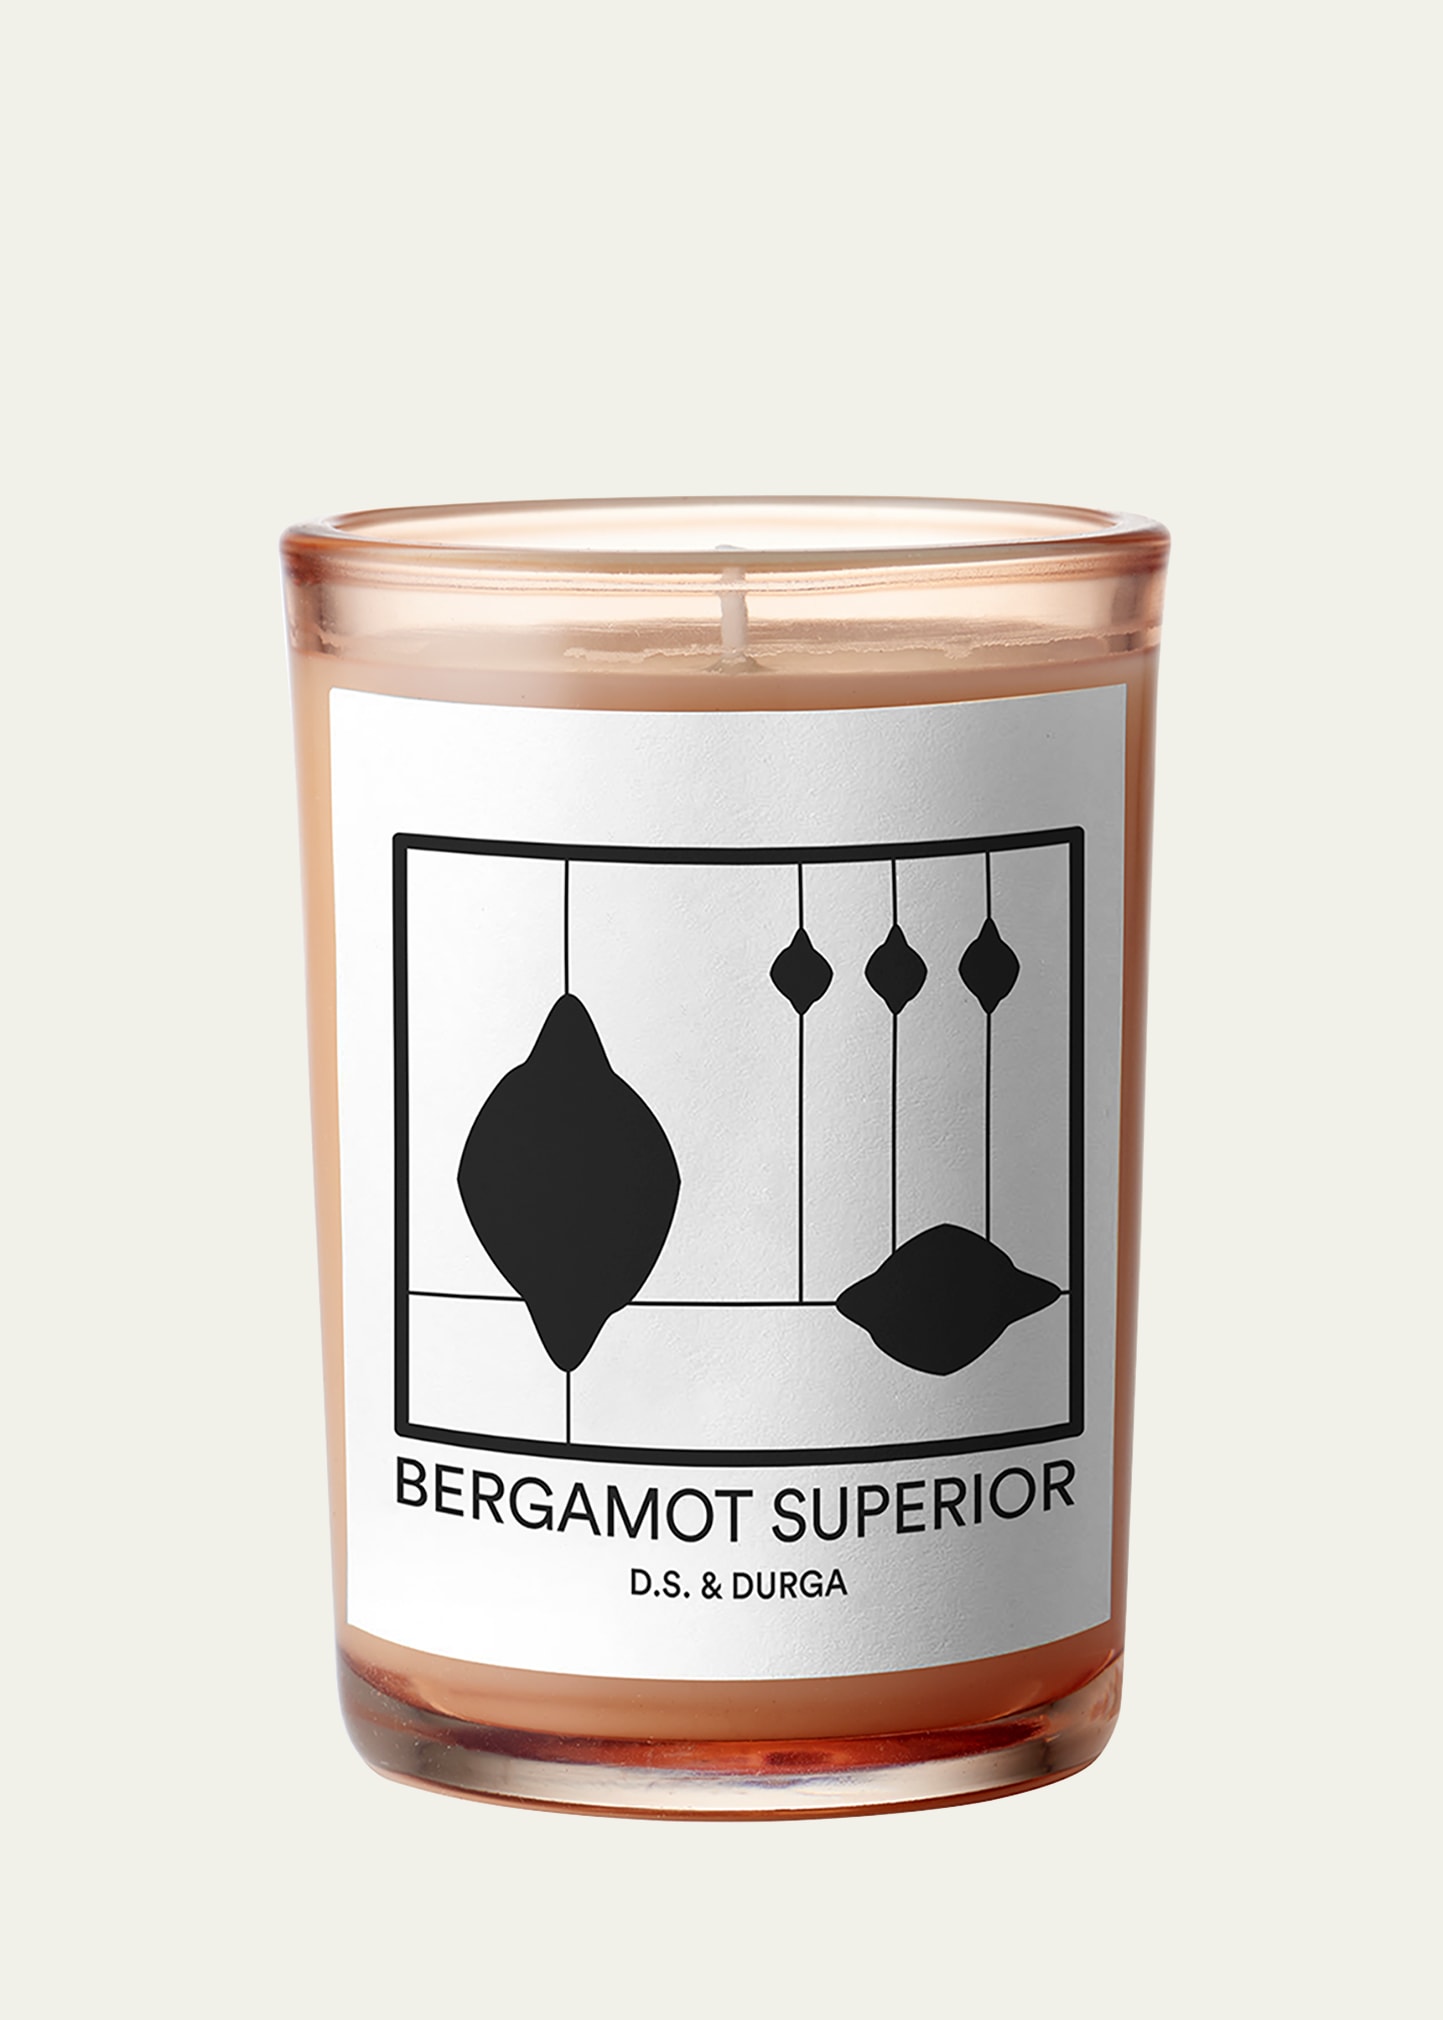 D.S. & DURGA 7 oz. Bergamot Superior Candle